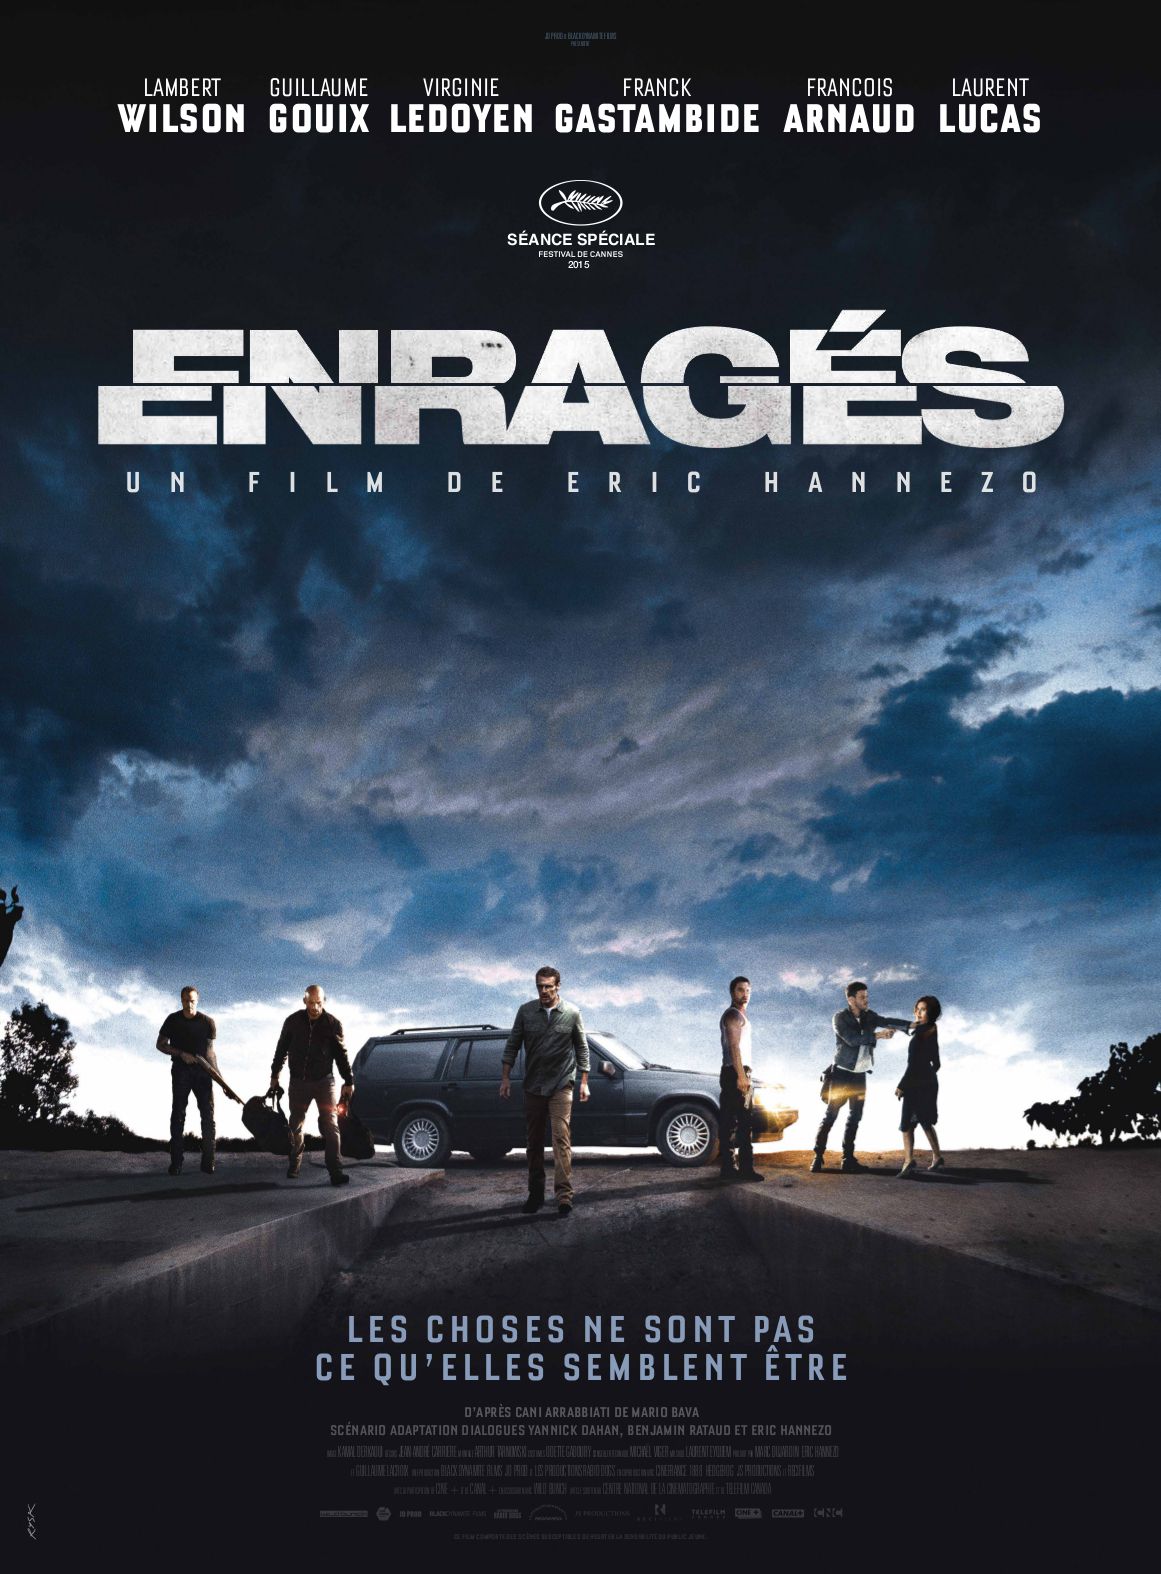 Enragés - Film (2015) streaming VF gratuit complet